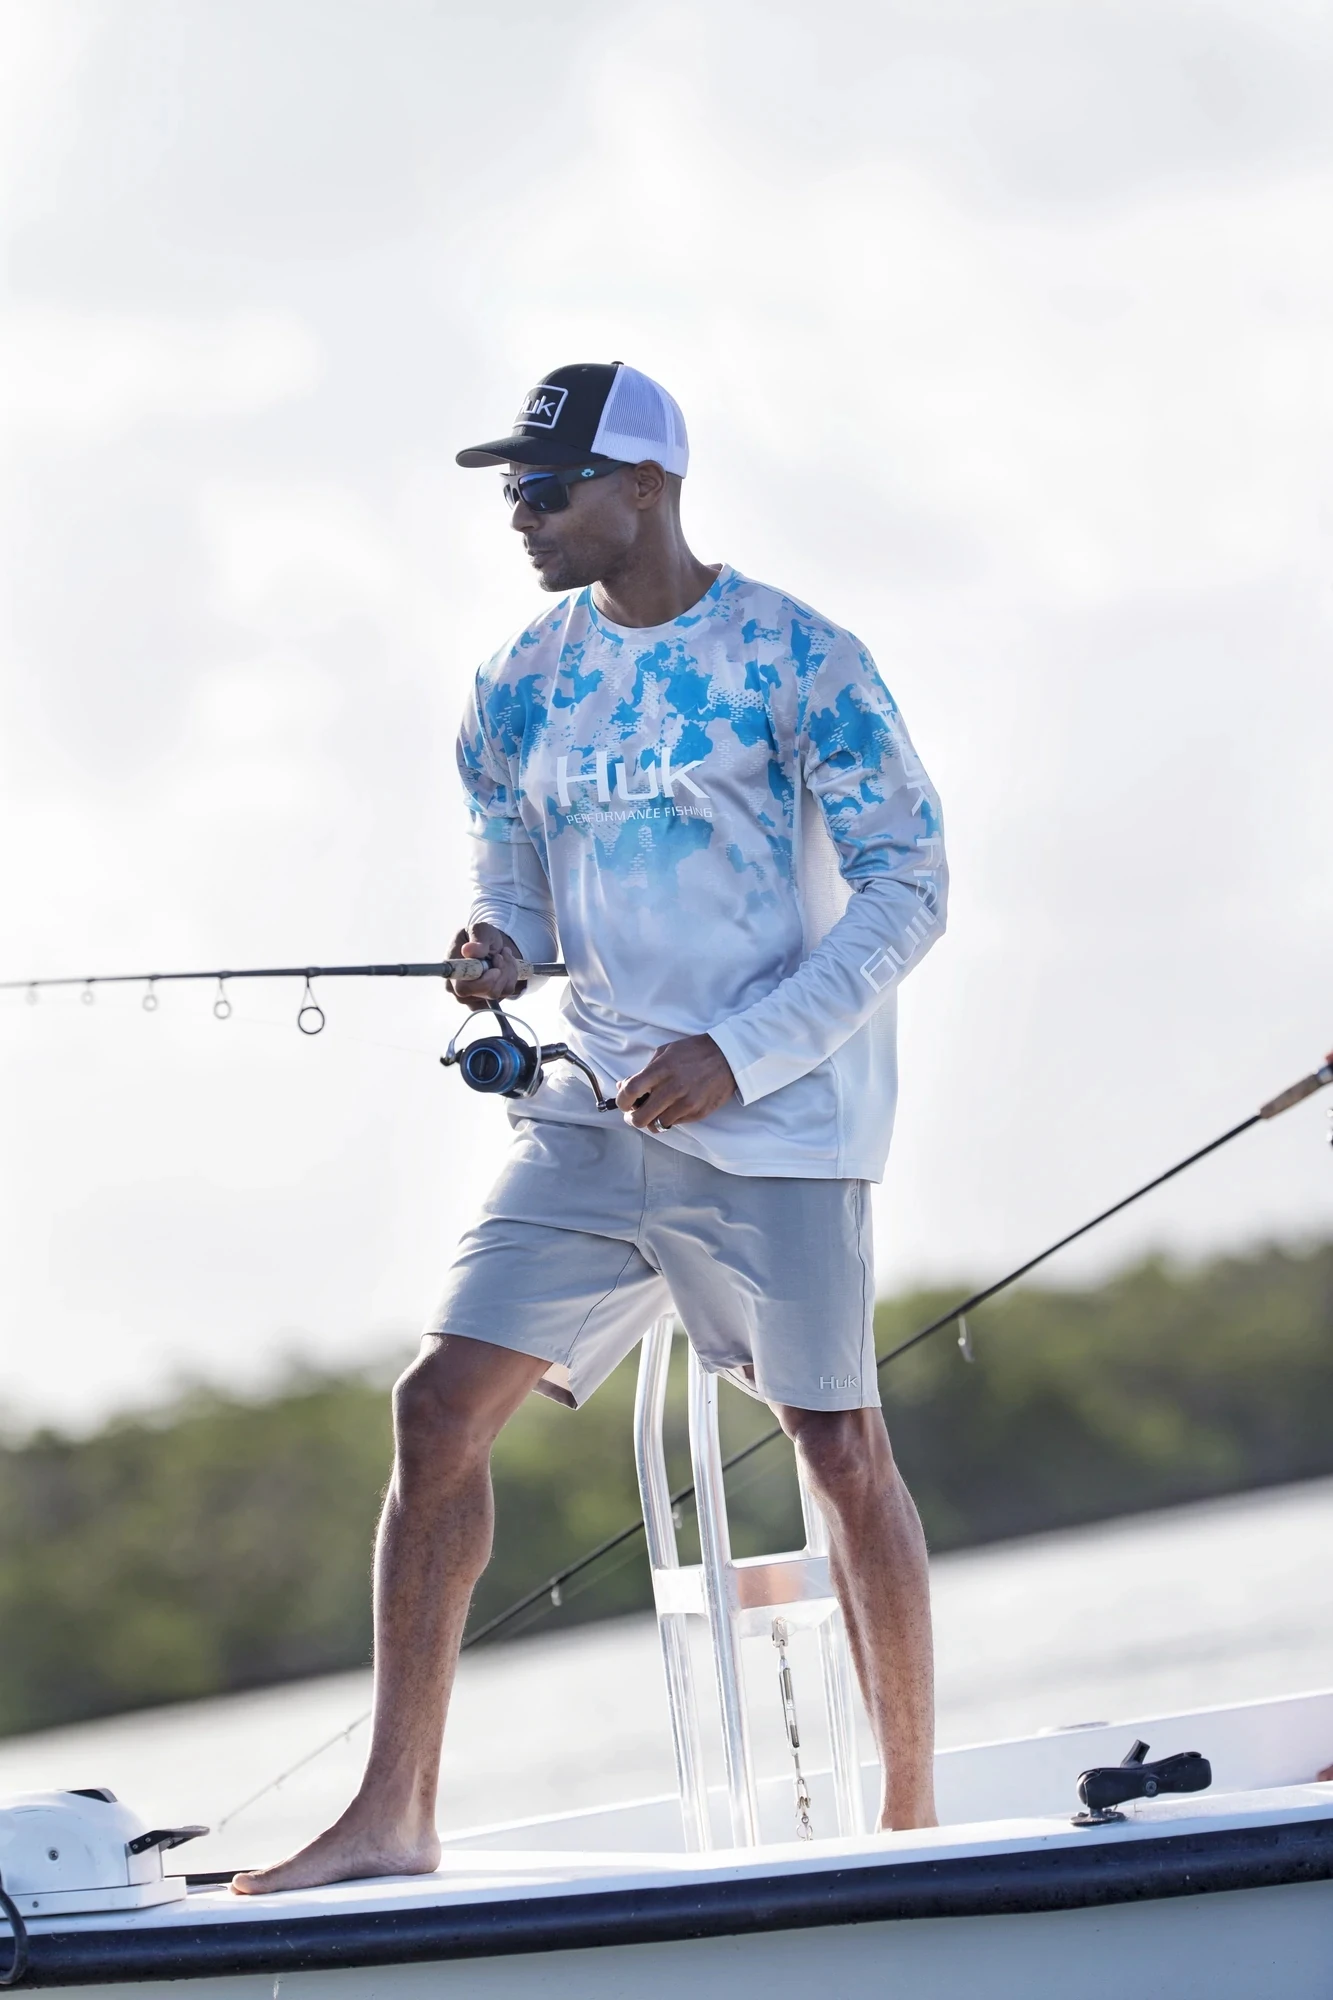 

Huk Gear Fishing Clothing Camisa De Pesca Fishing Shirts Long Sleeve Uv Protection Breathable Quick Dry Anti-uv Sunscreen Tops